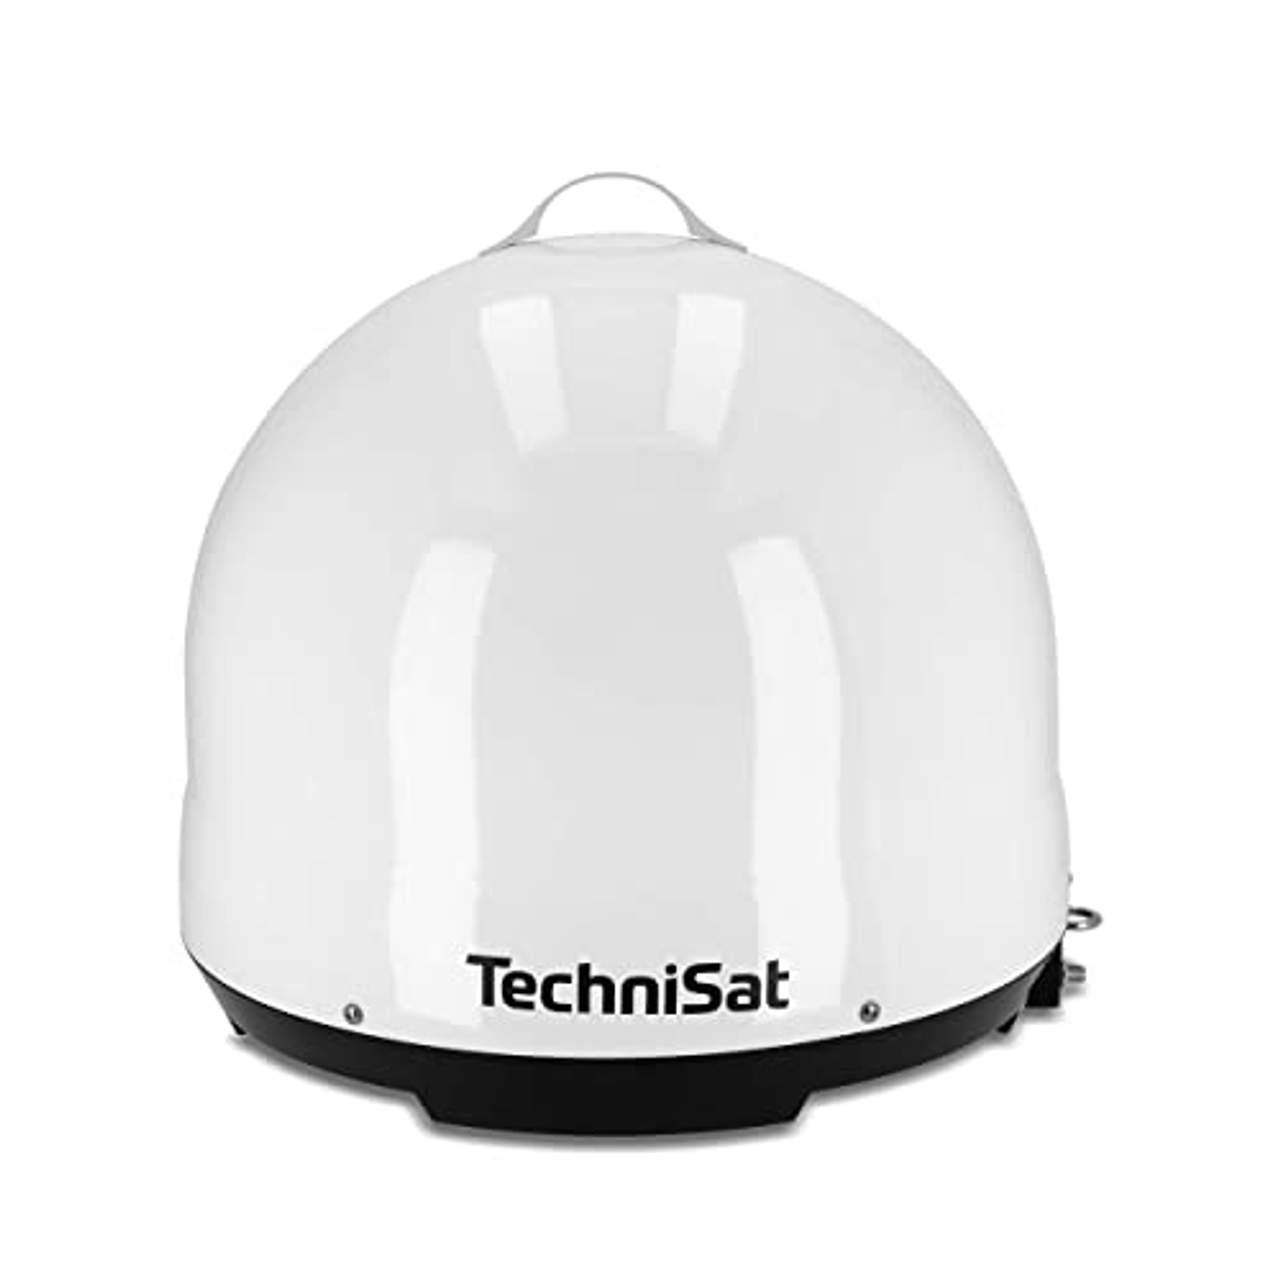 TechniSat Skyrider Dome ISI